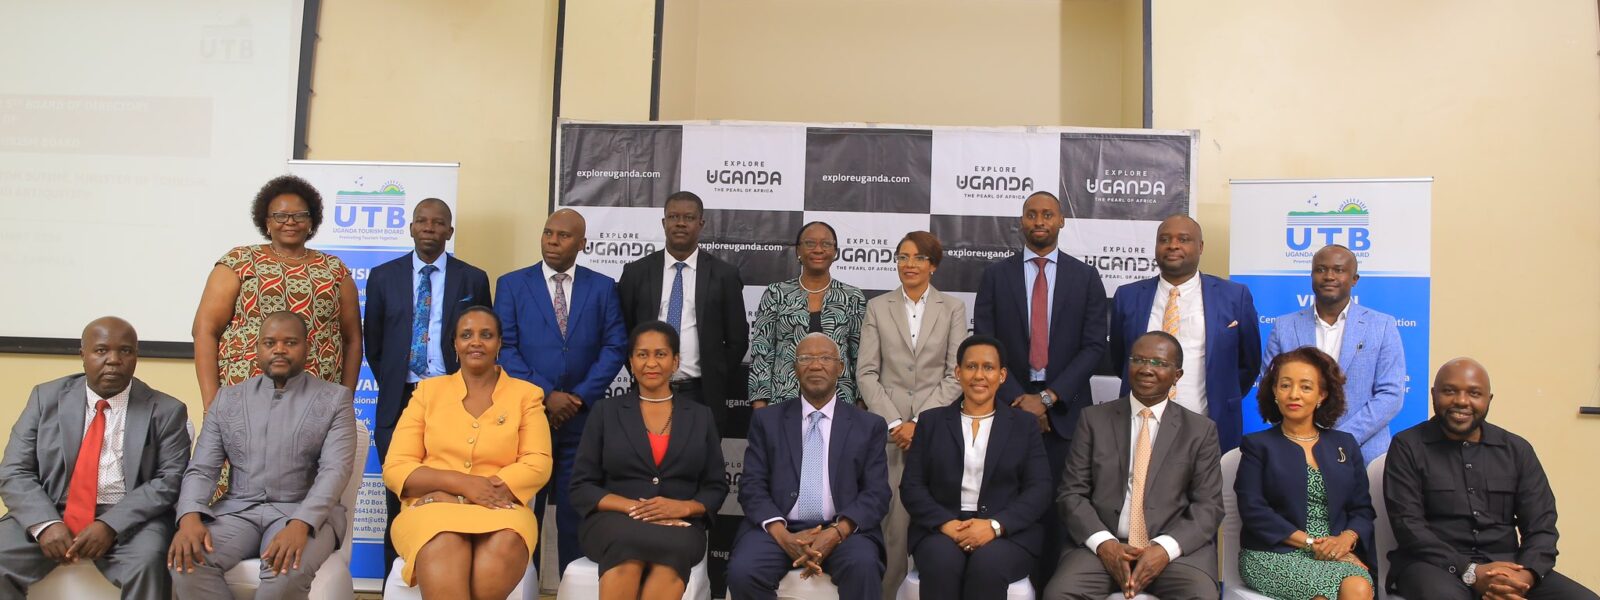 Uganda Tourism Board welcomes a new Board of Directors